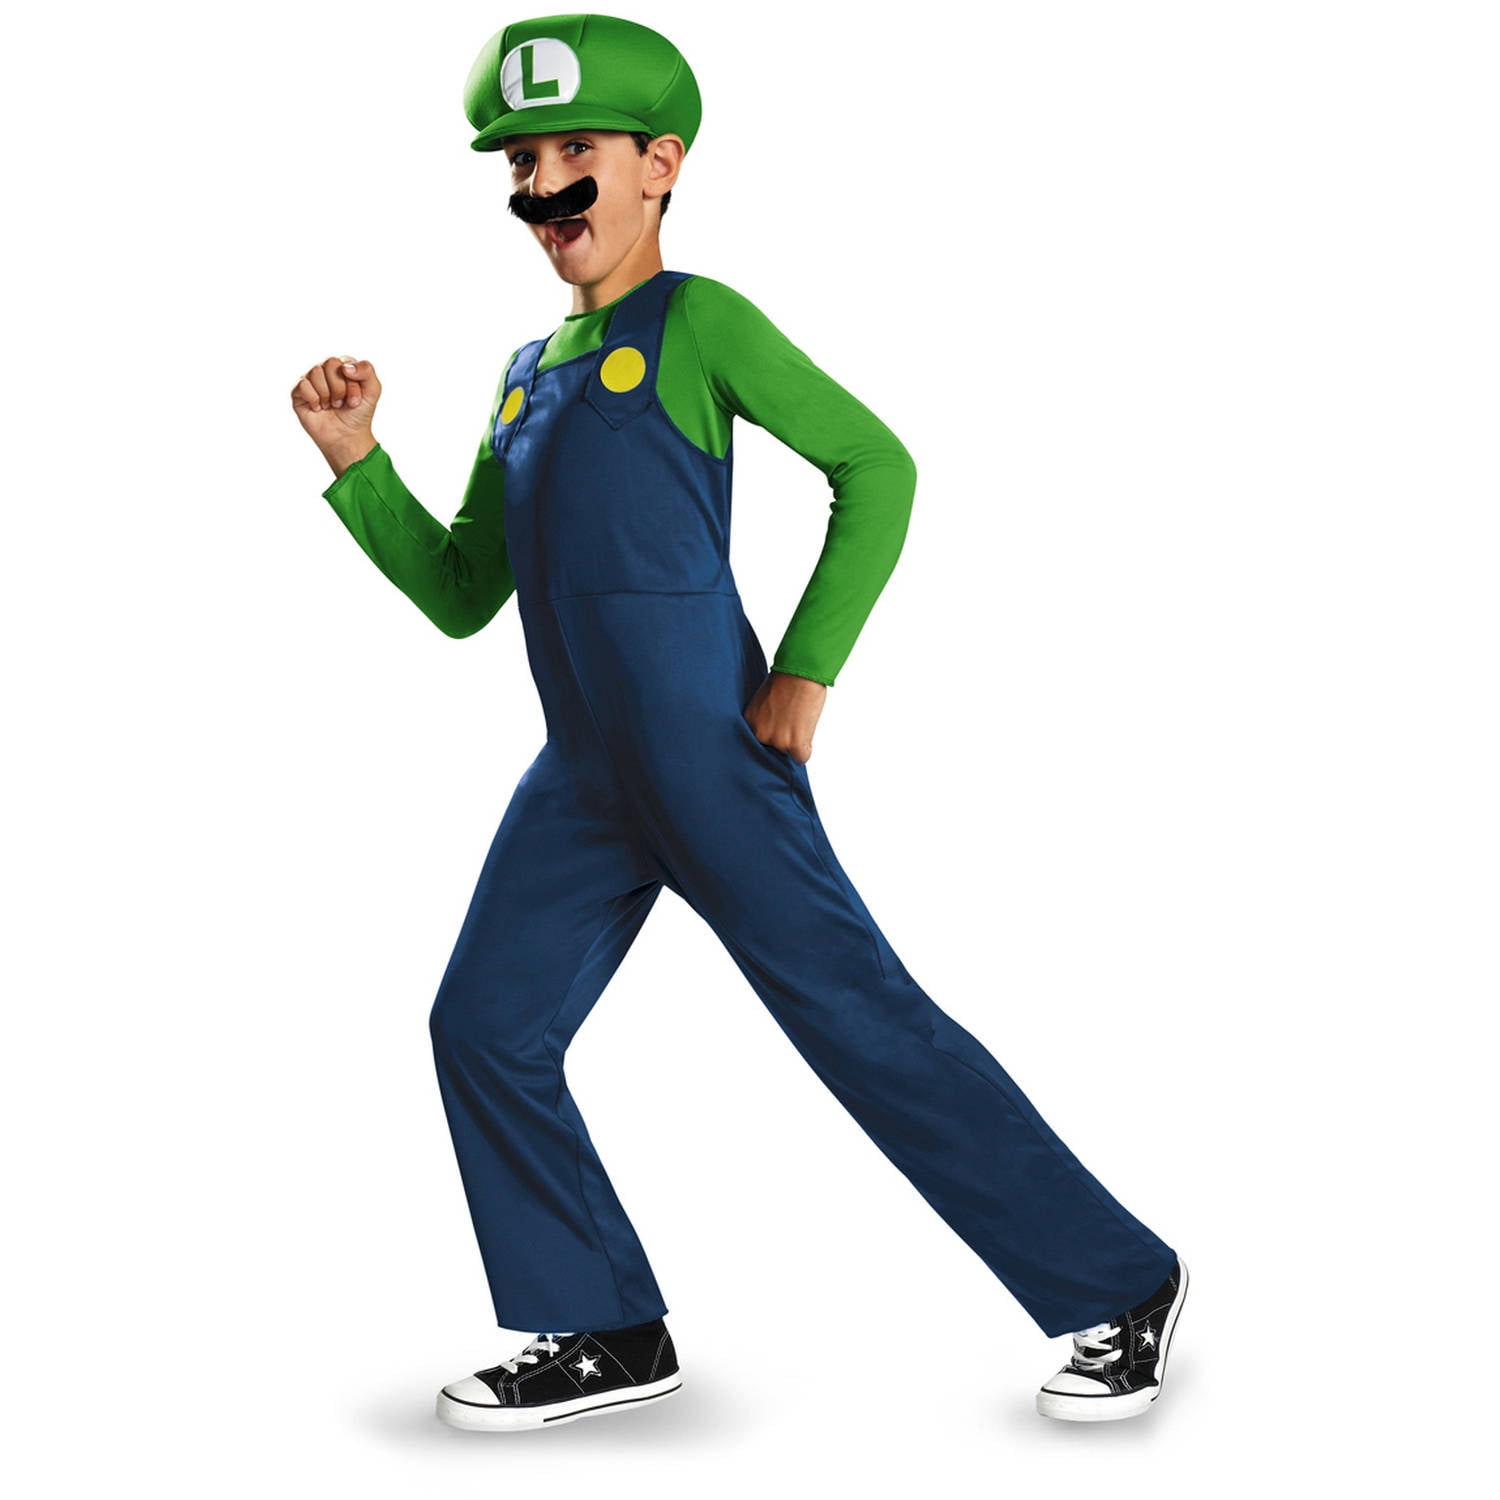 DIY Luigi's Mansion Costume For Kids